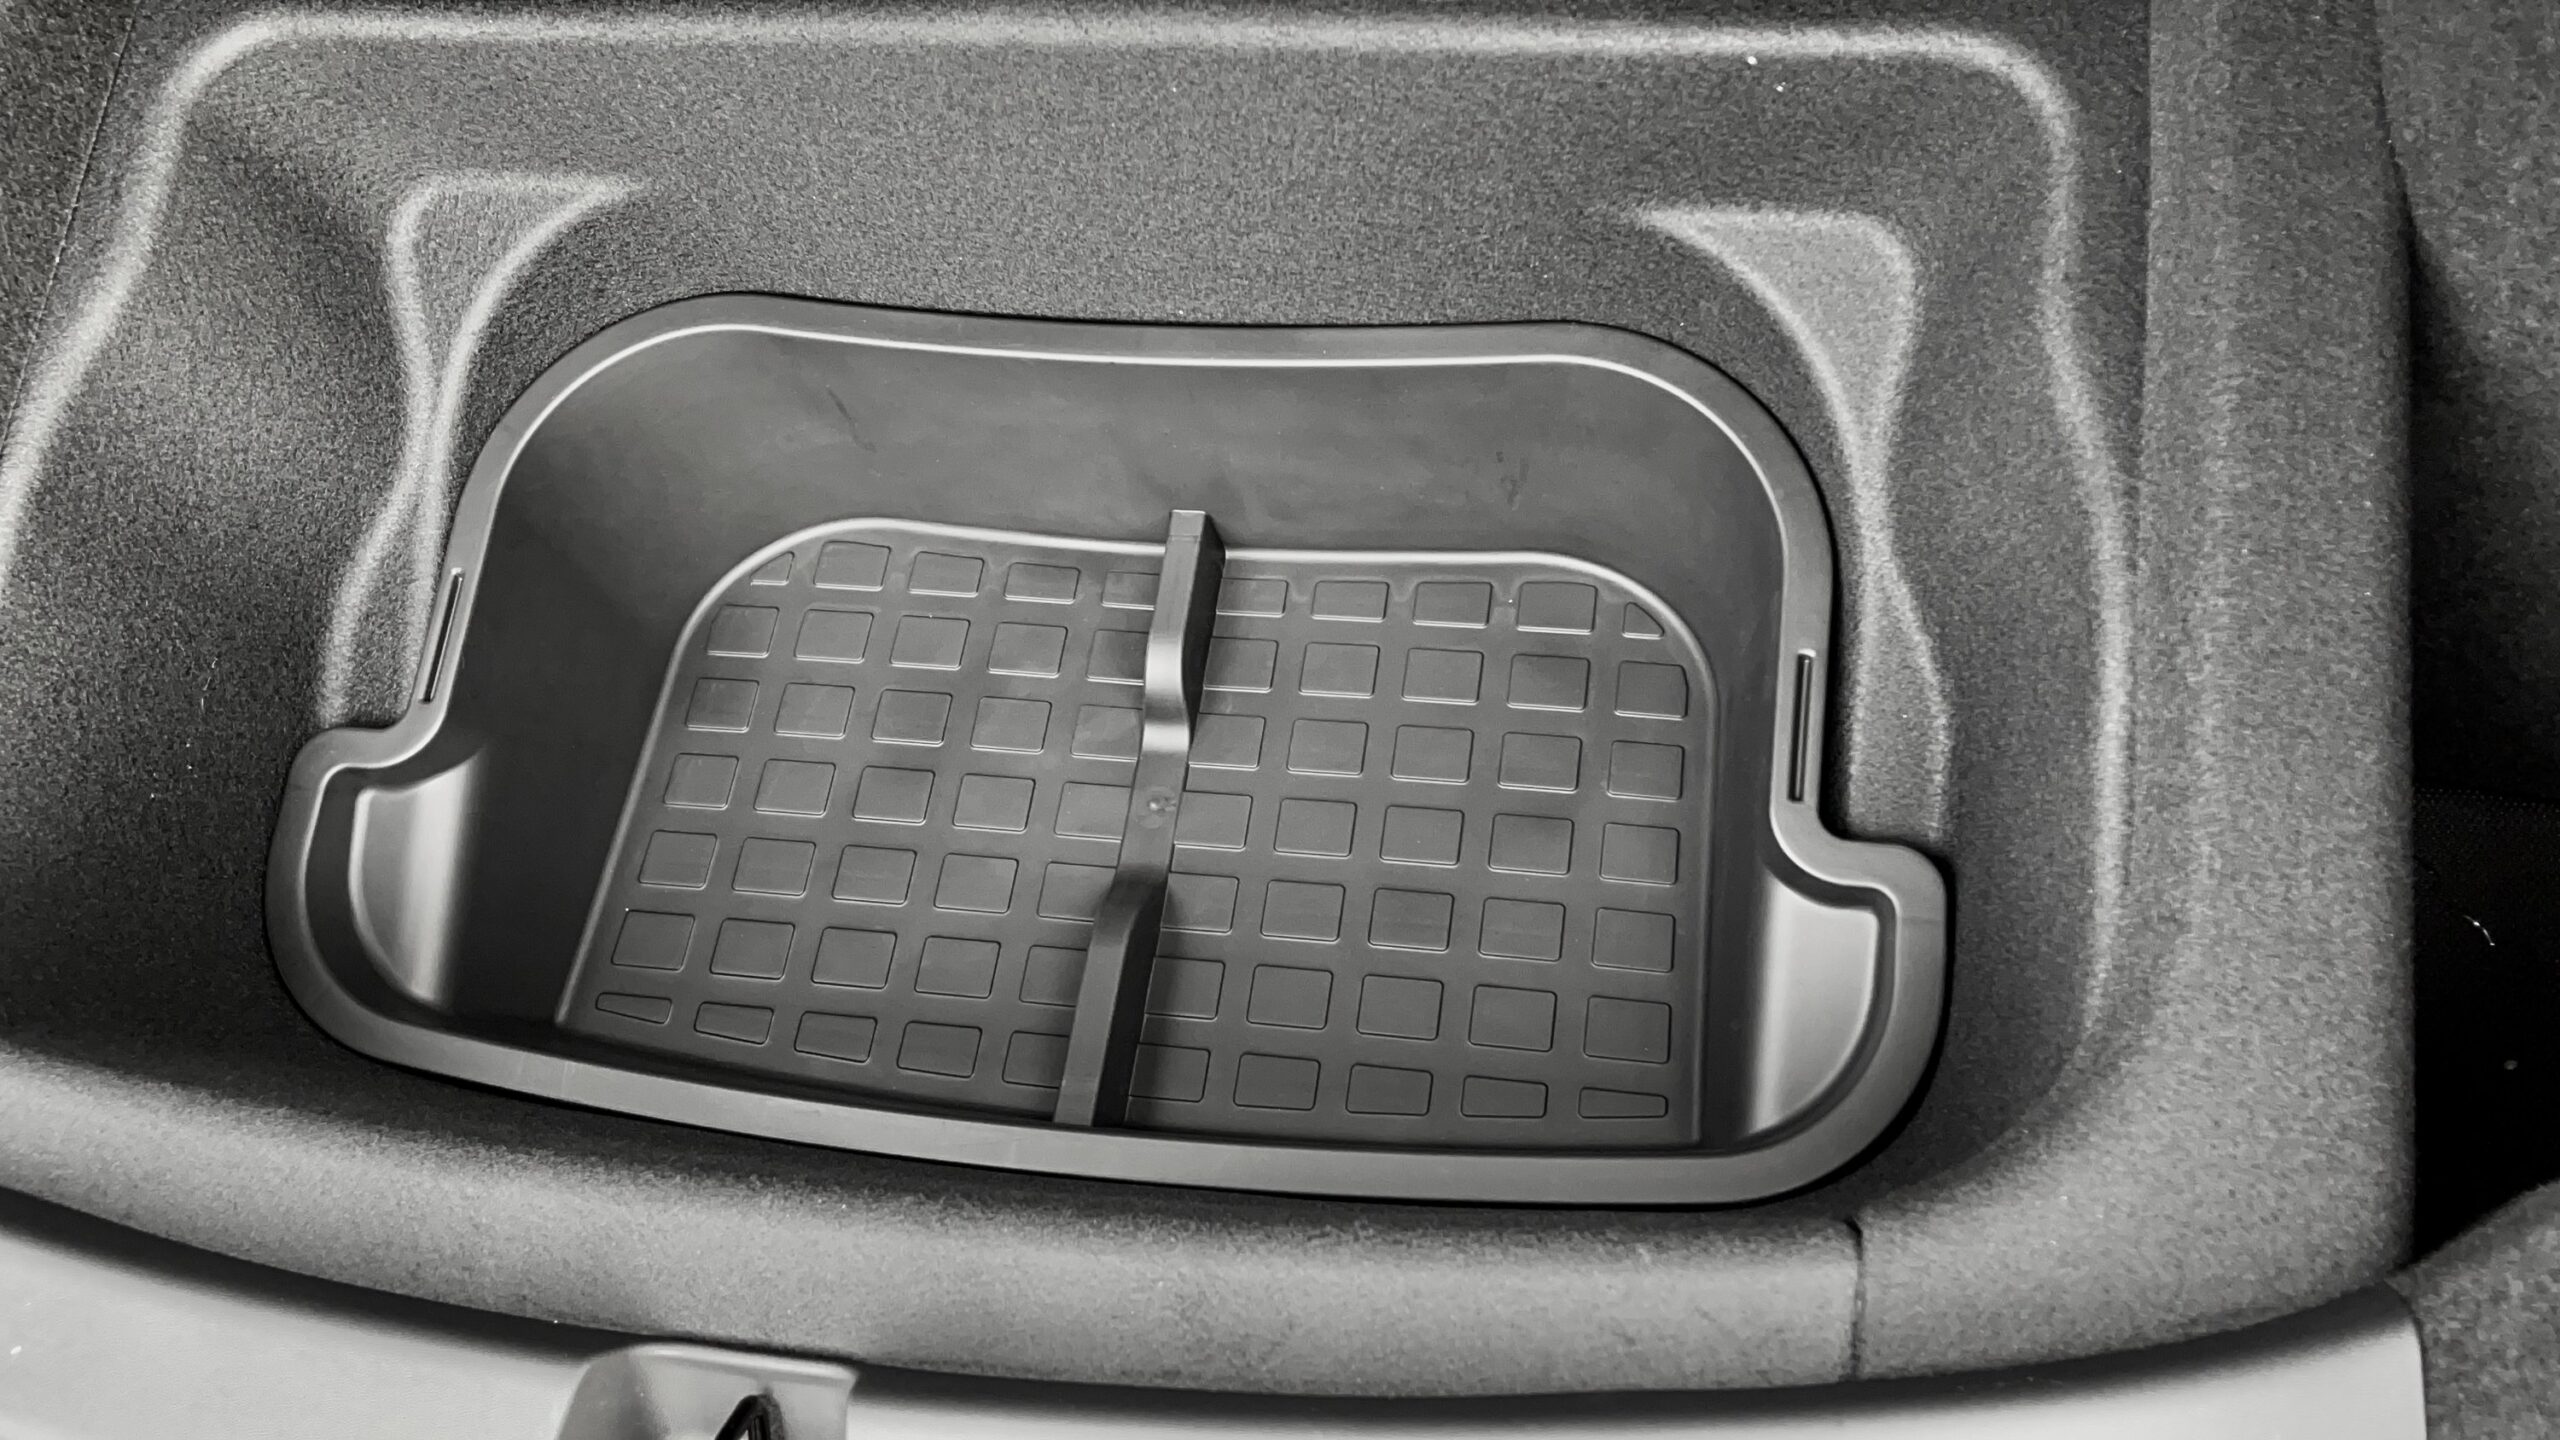 Kofferraum Storage Box Tesla Model 3 Heck - Forcar Concepts